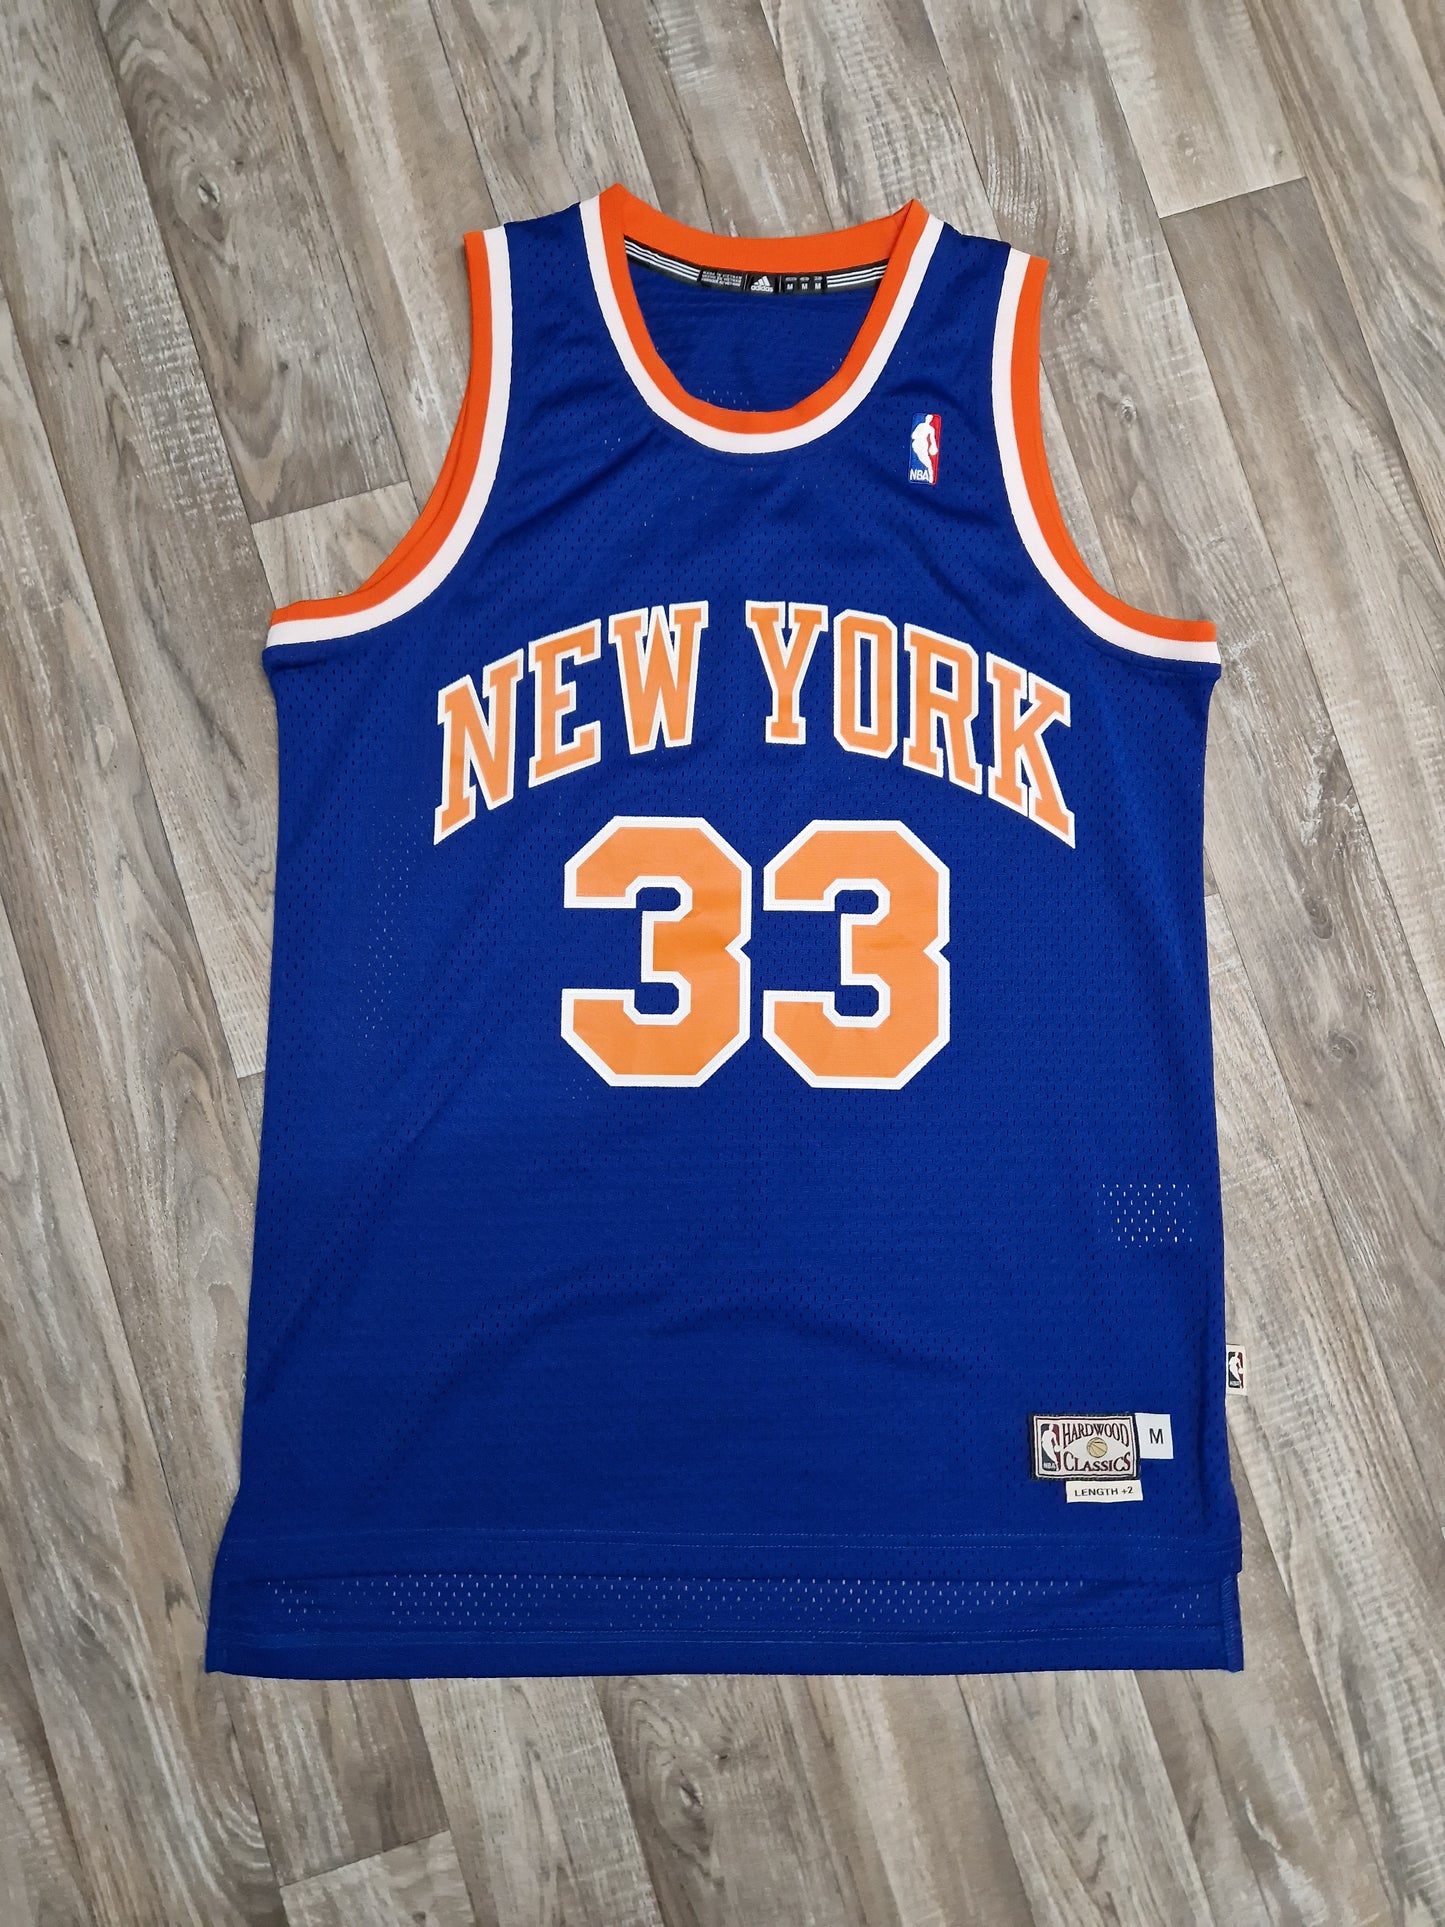 Patrick Ewing New York Knicks Jersey Size Medium